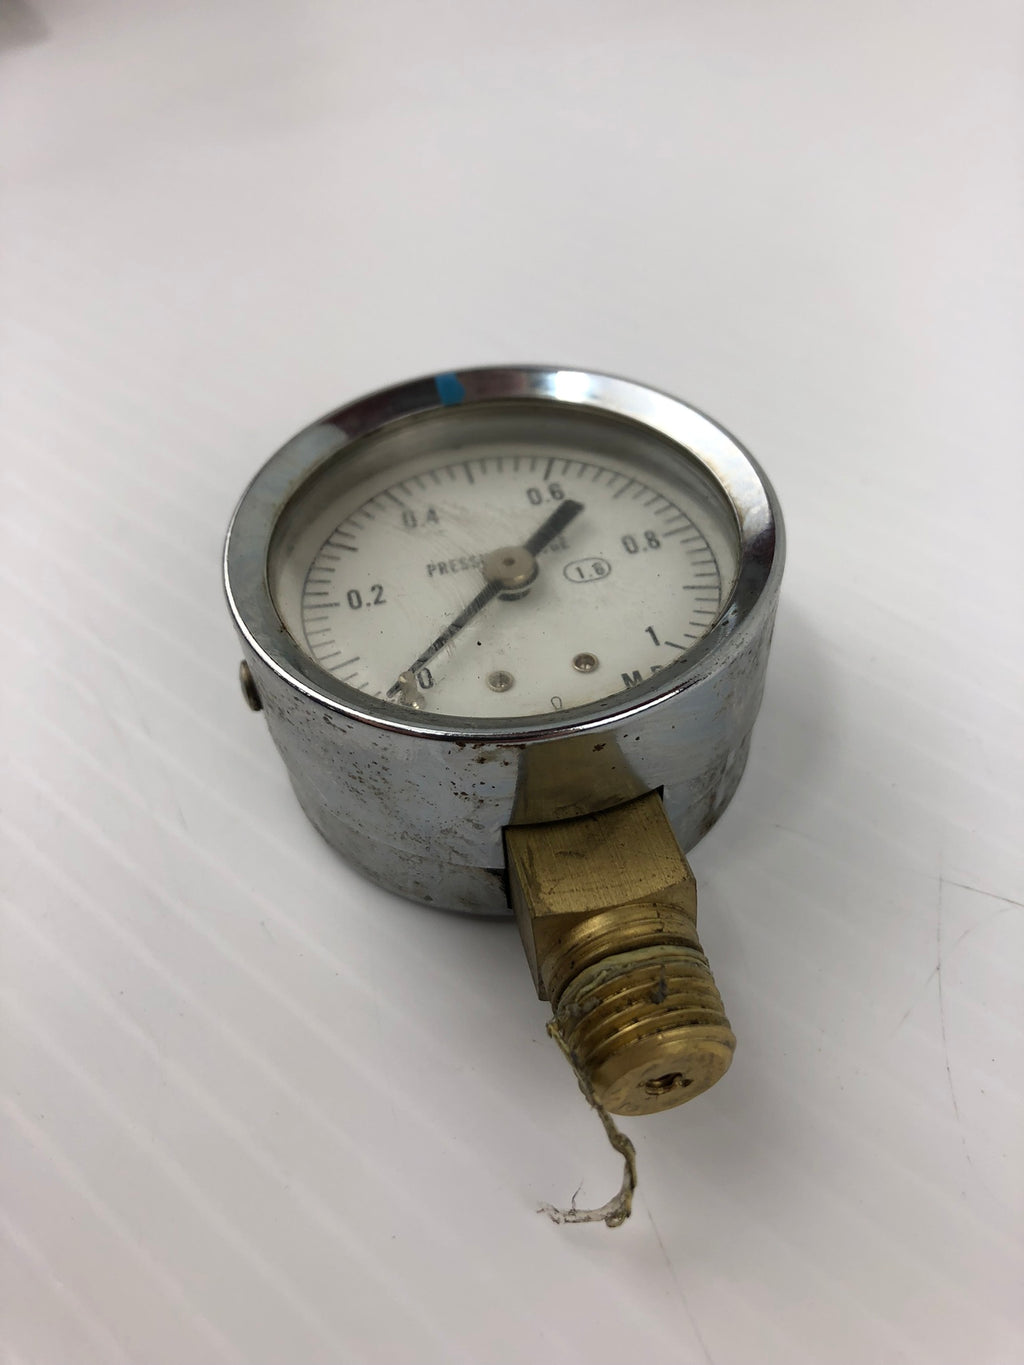 Pressure Test Products - Pressure Gauge - 1MPa